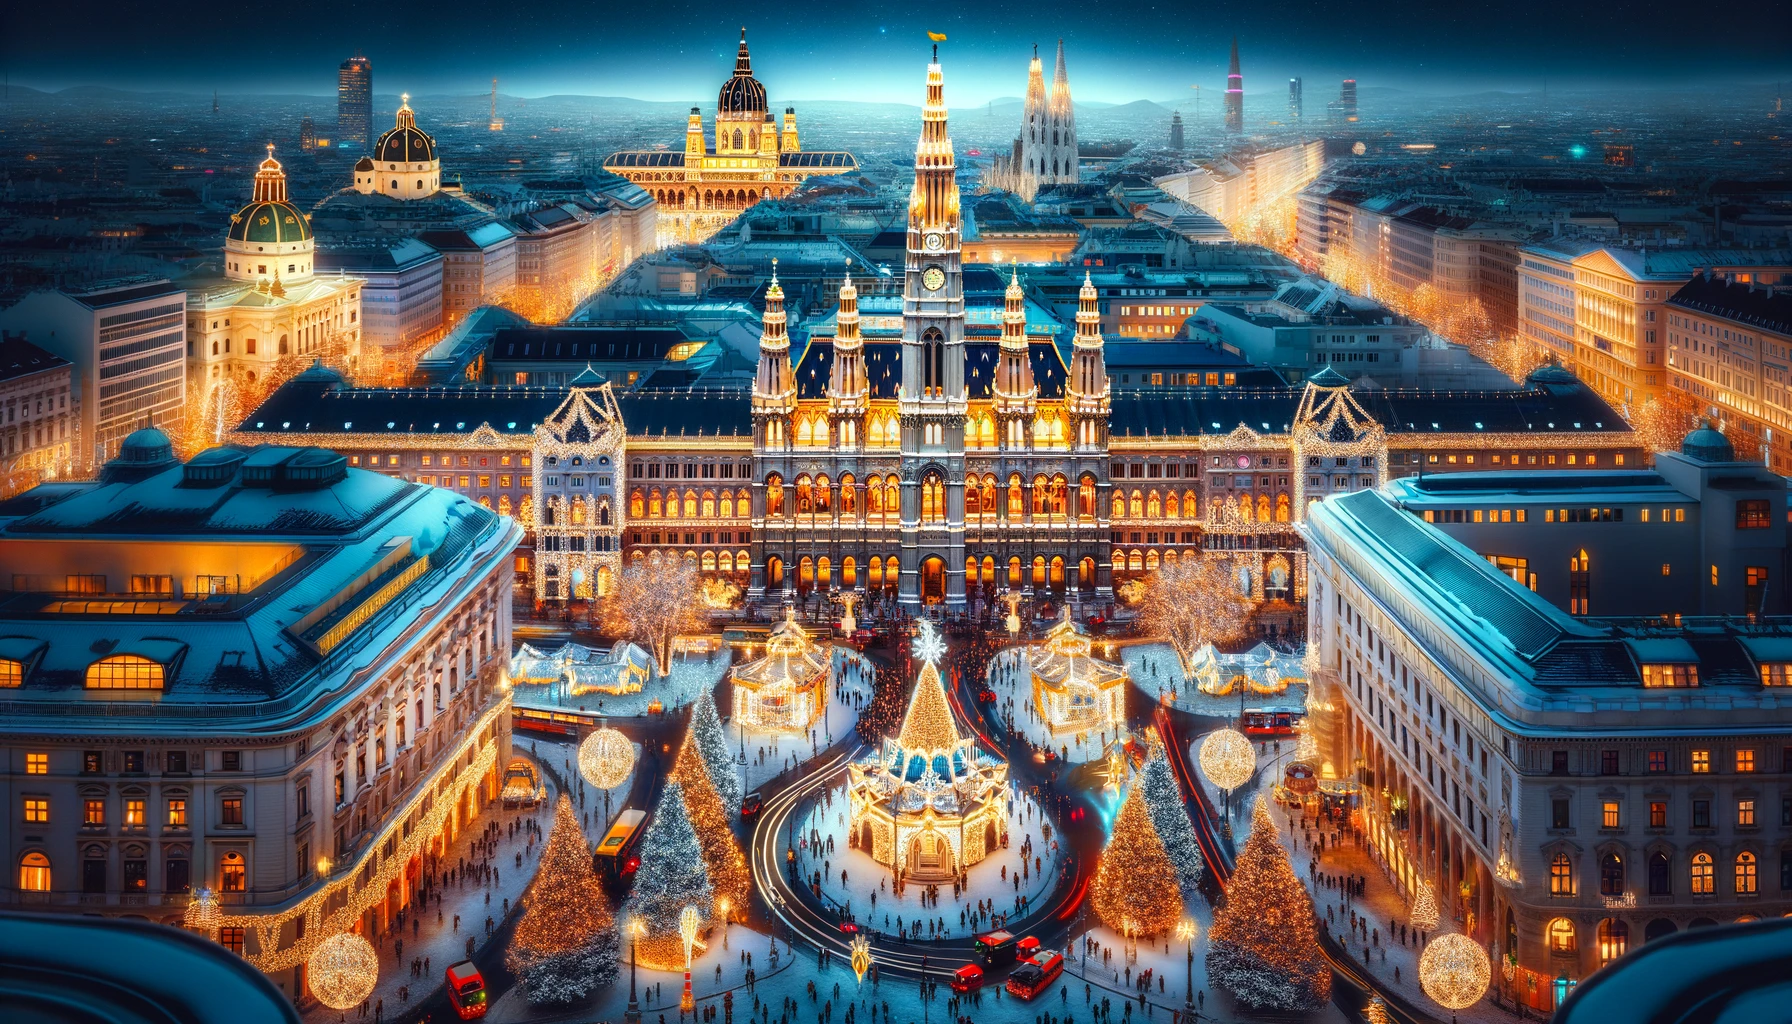 Vienna Landmarks Illuminated for New Year's Eve